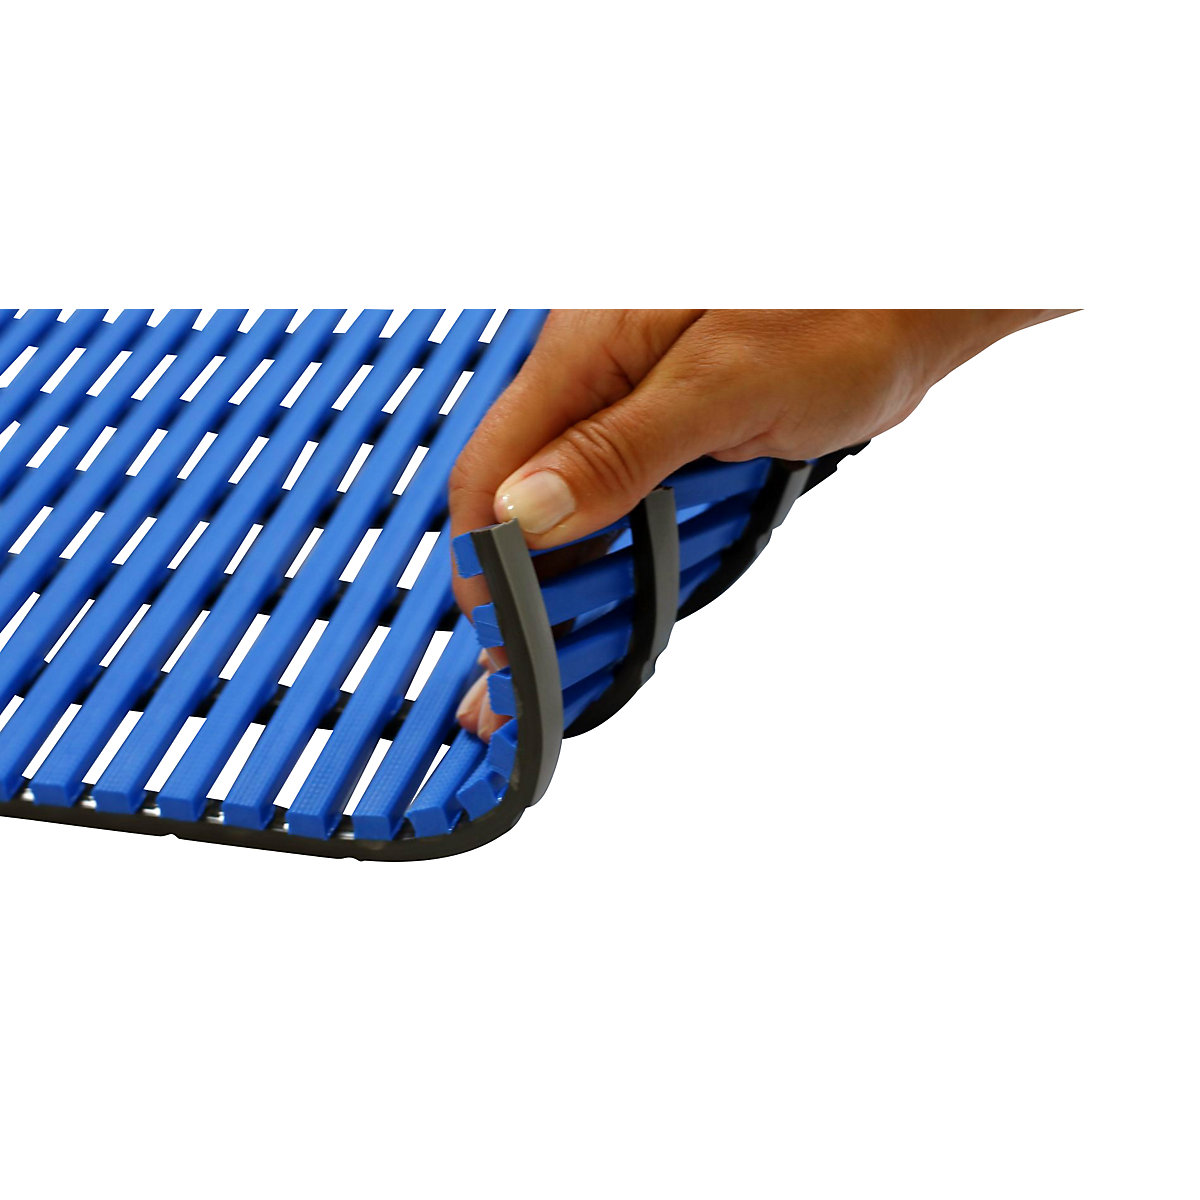 Wet room mat, anti-bacterial, 10 m roll, blue, width 600 mm